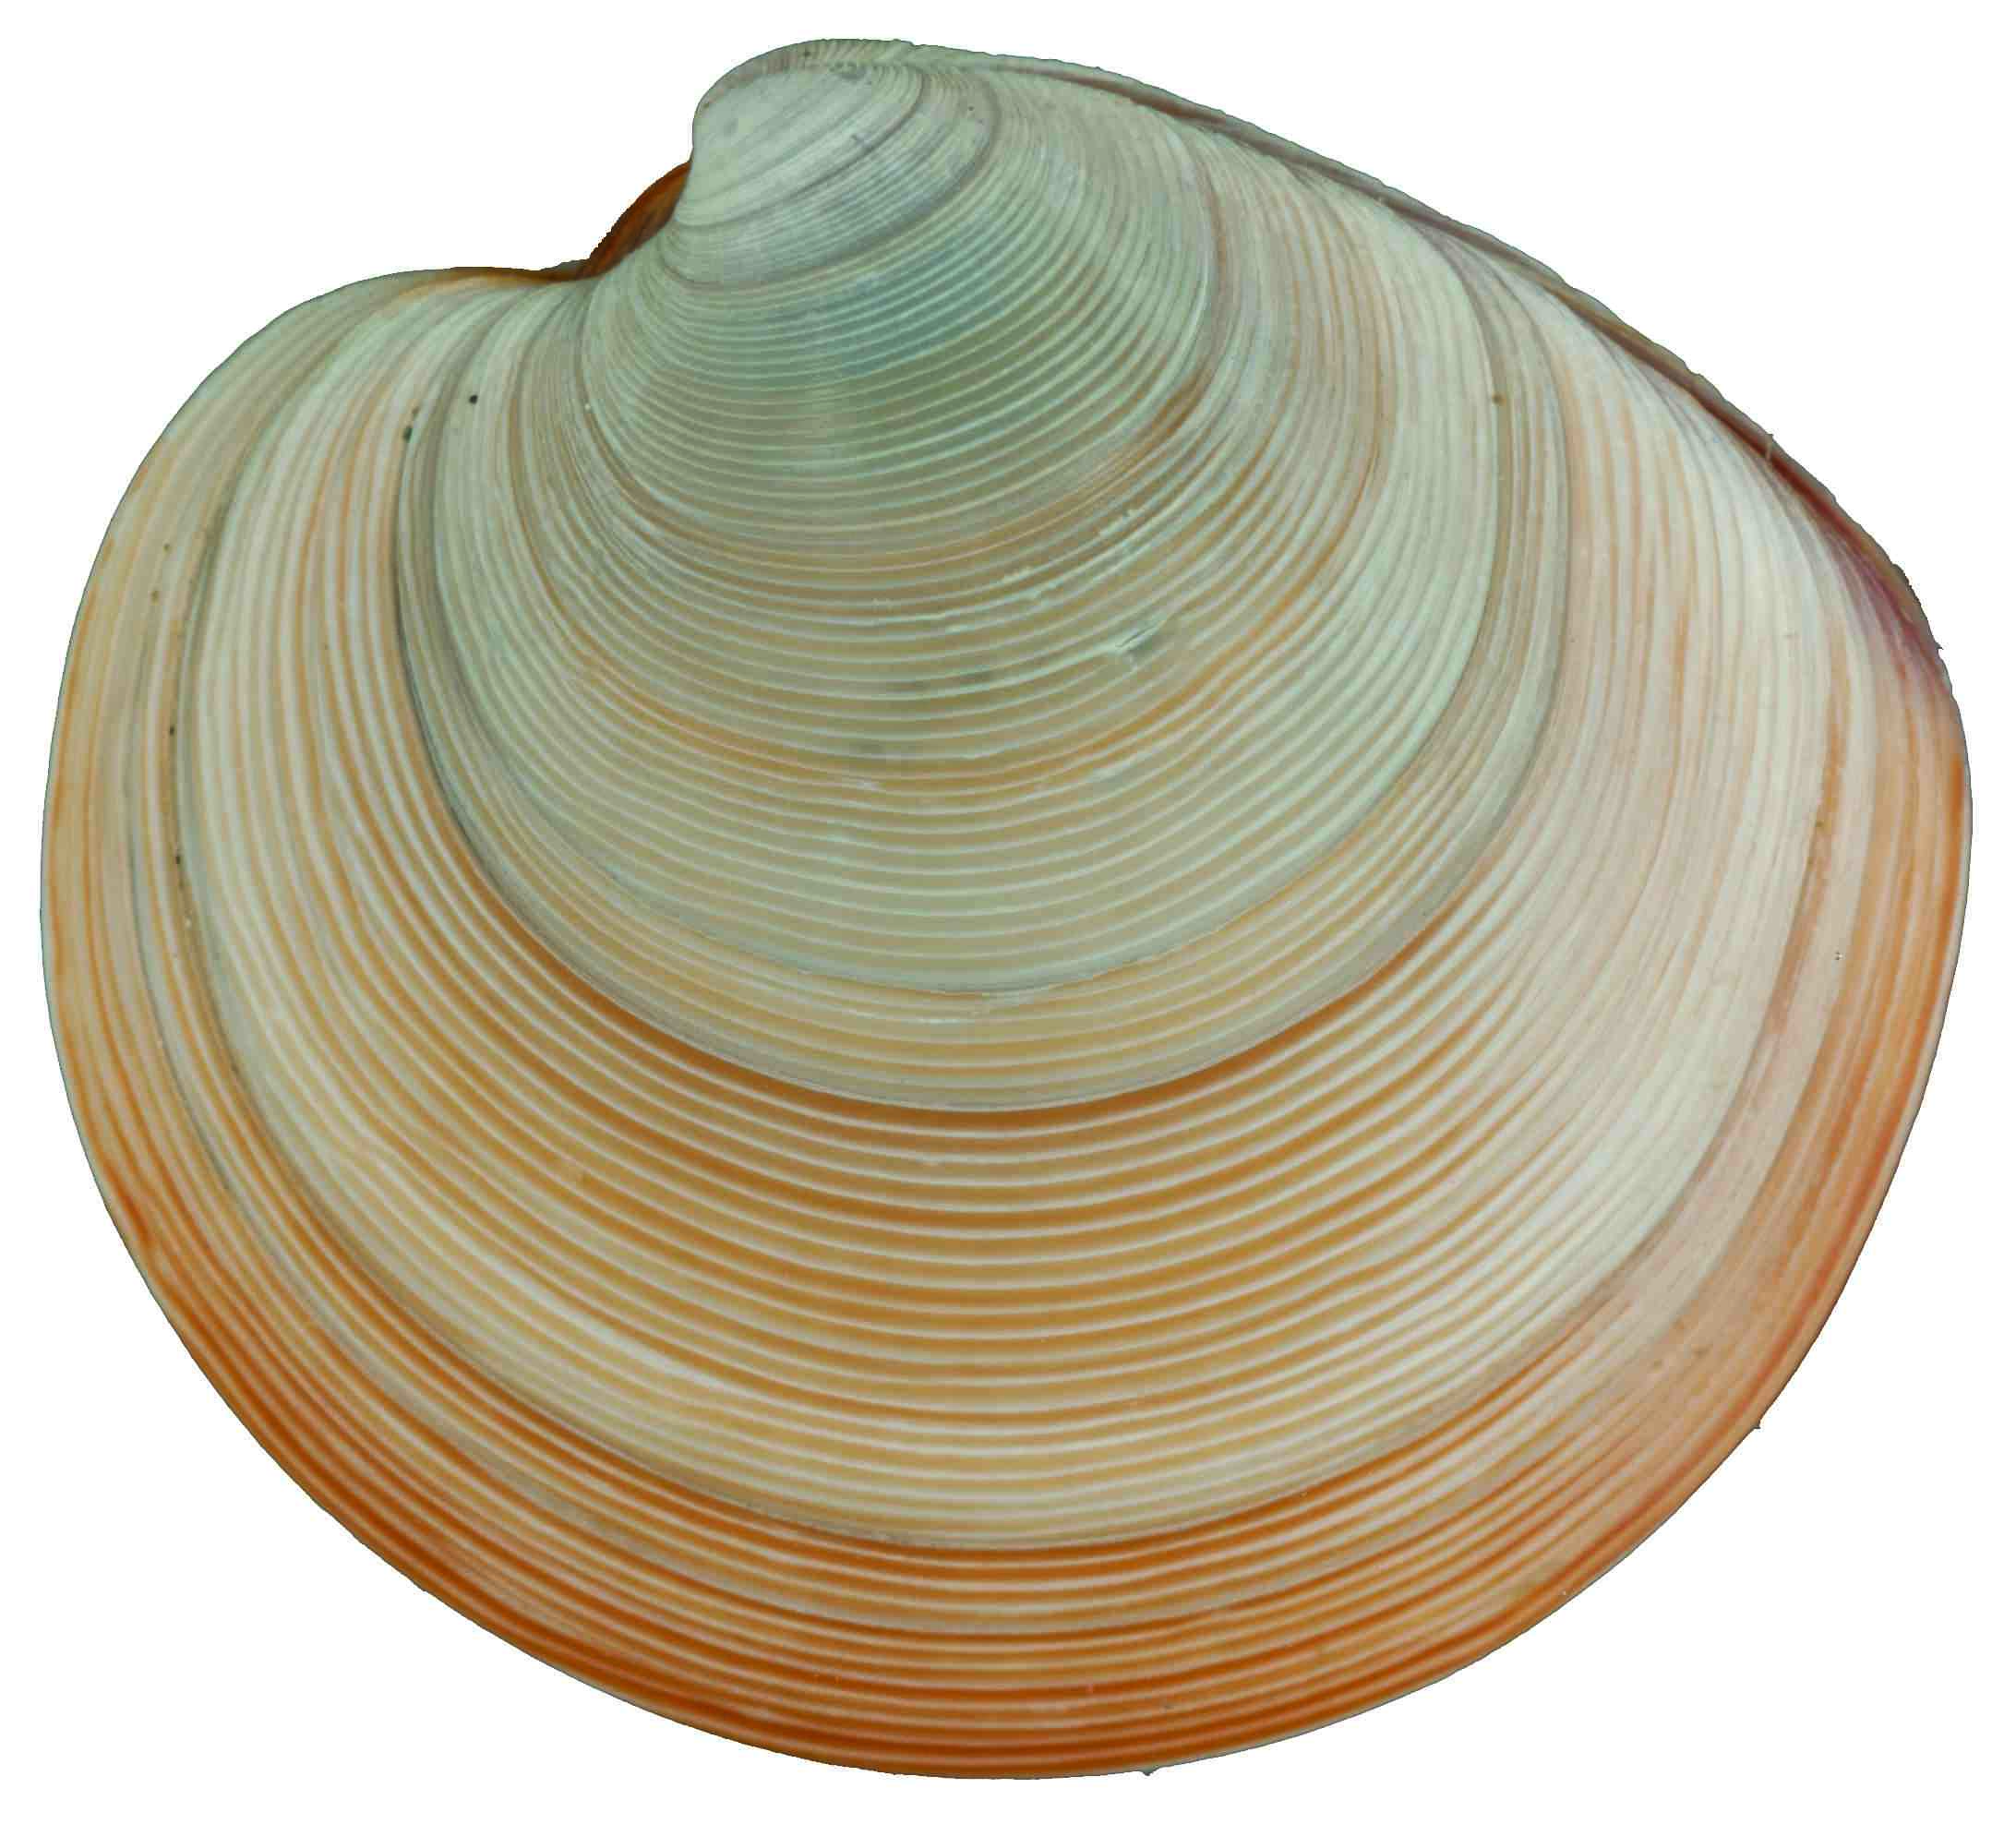 Venus clam - northern